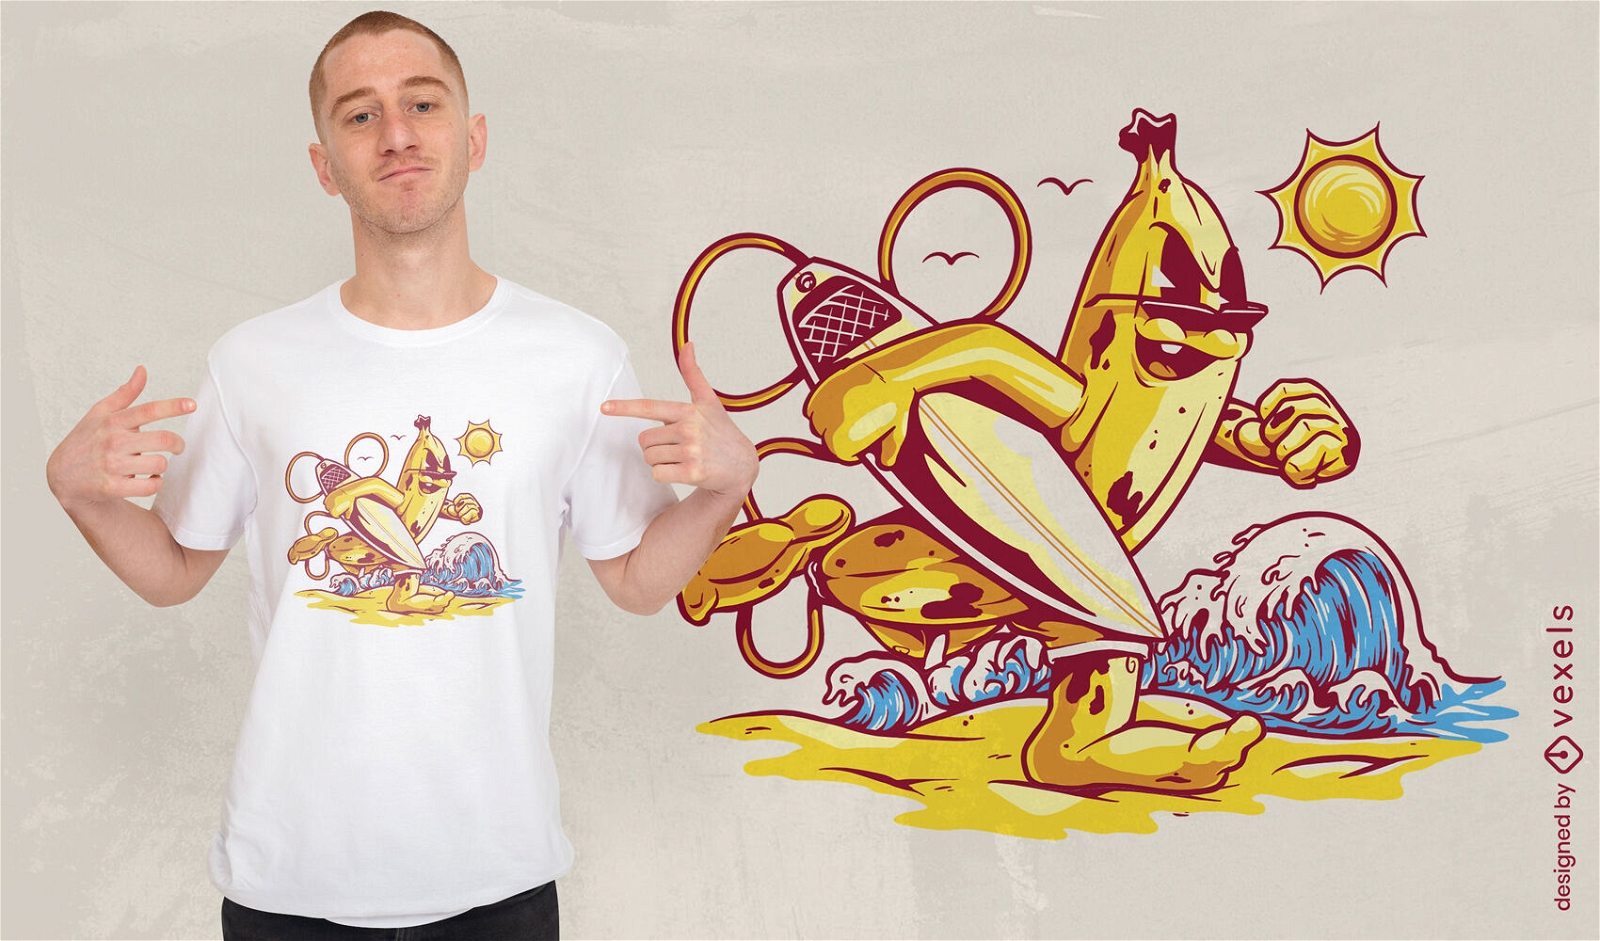 Banana surfing in beach t-shirt design